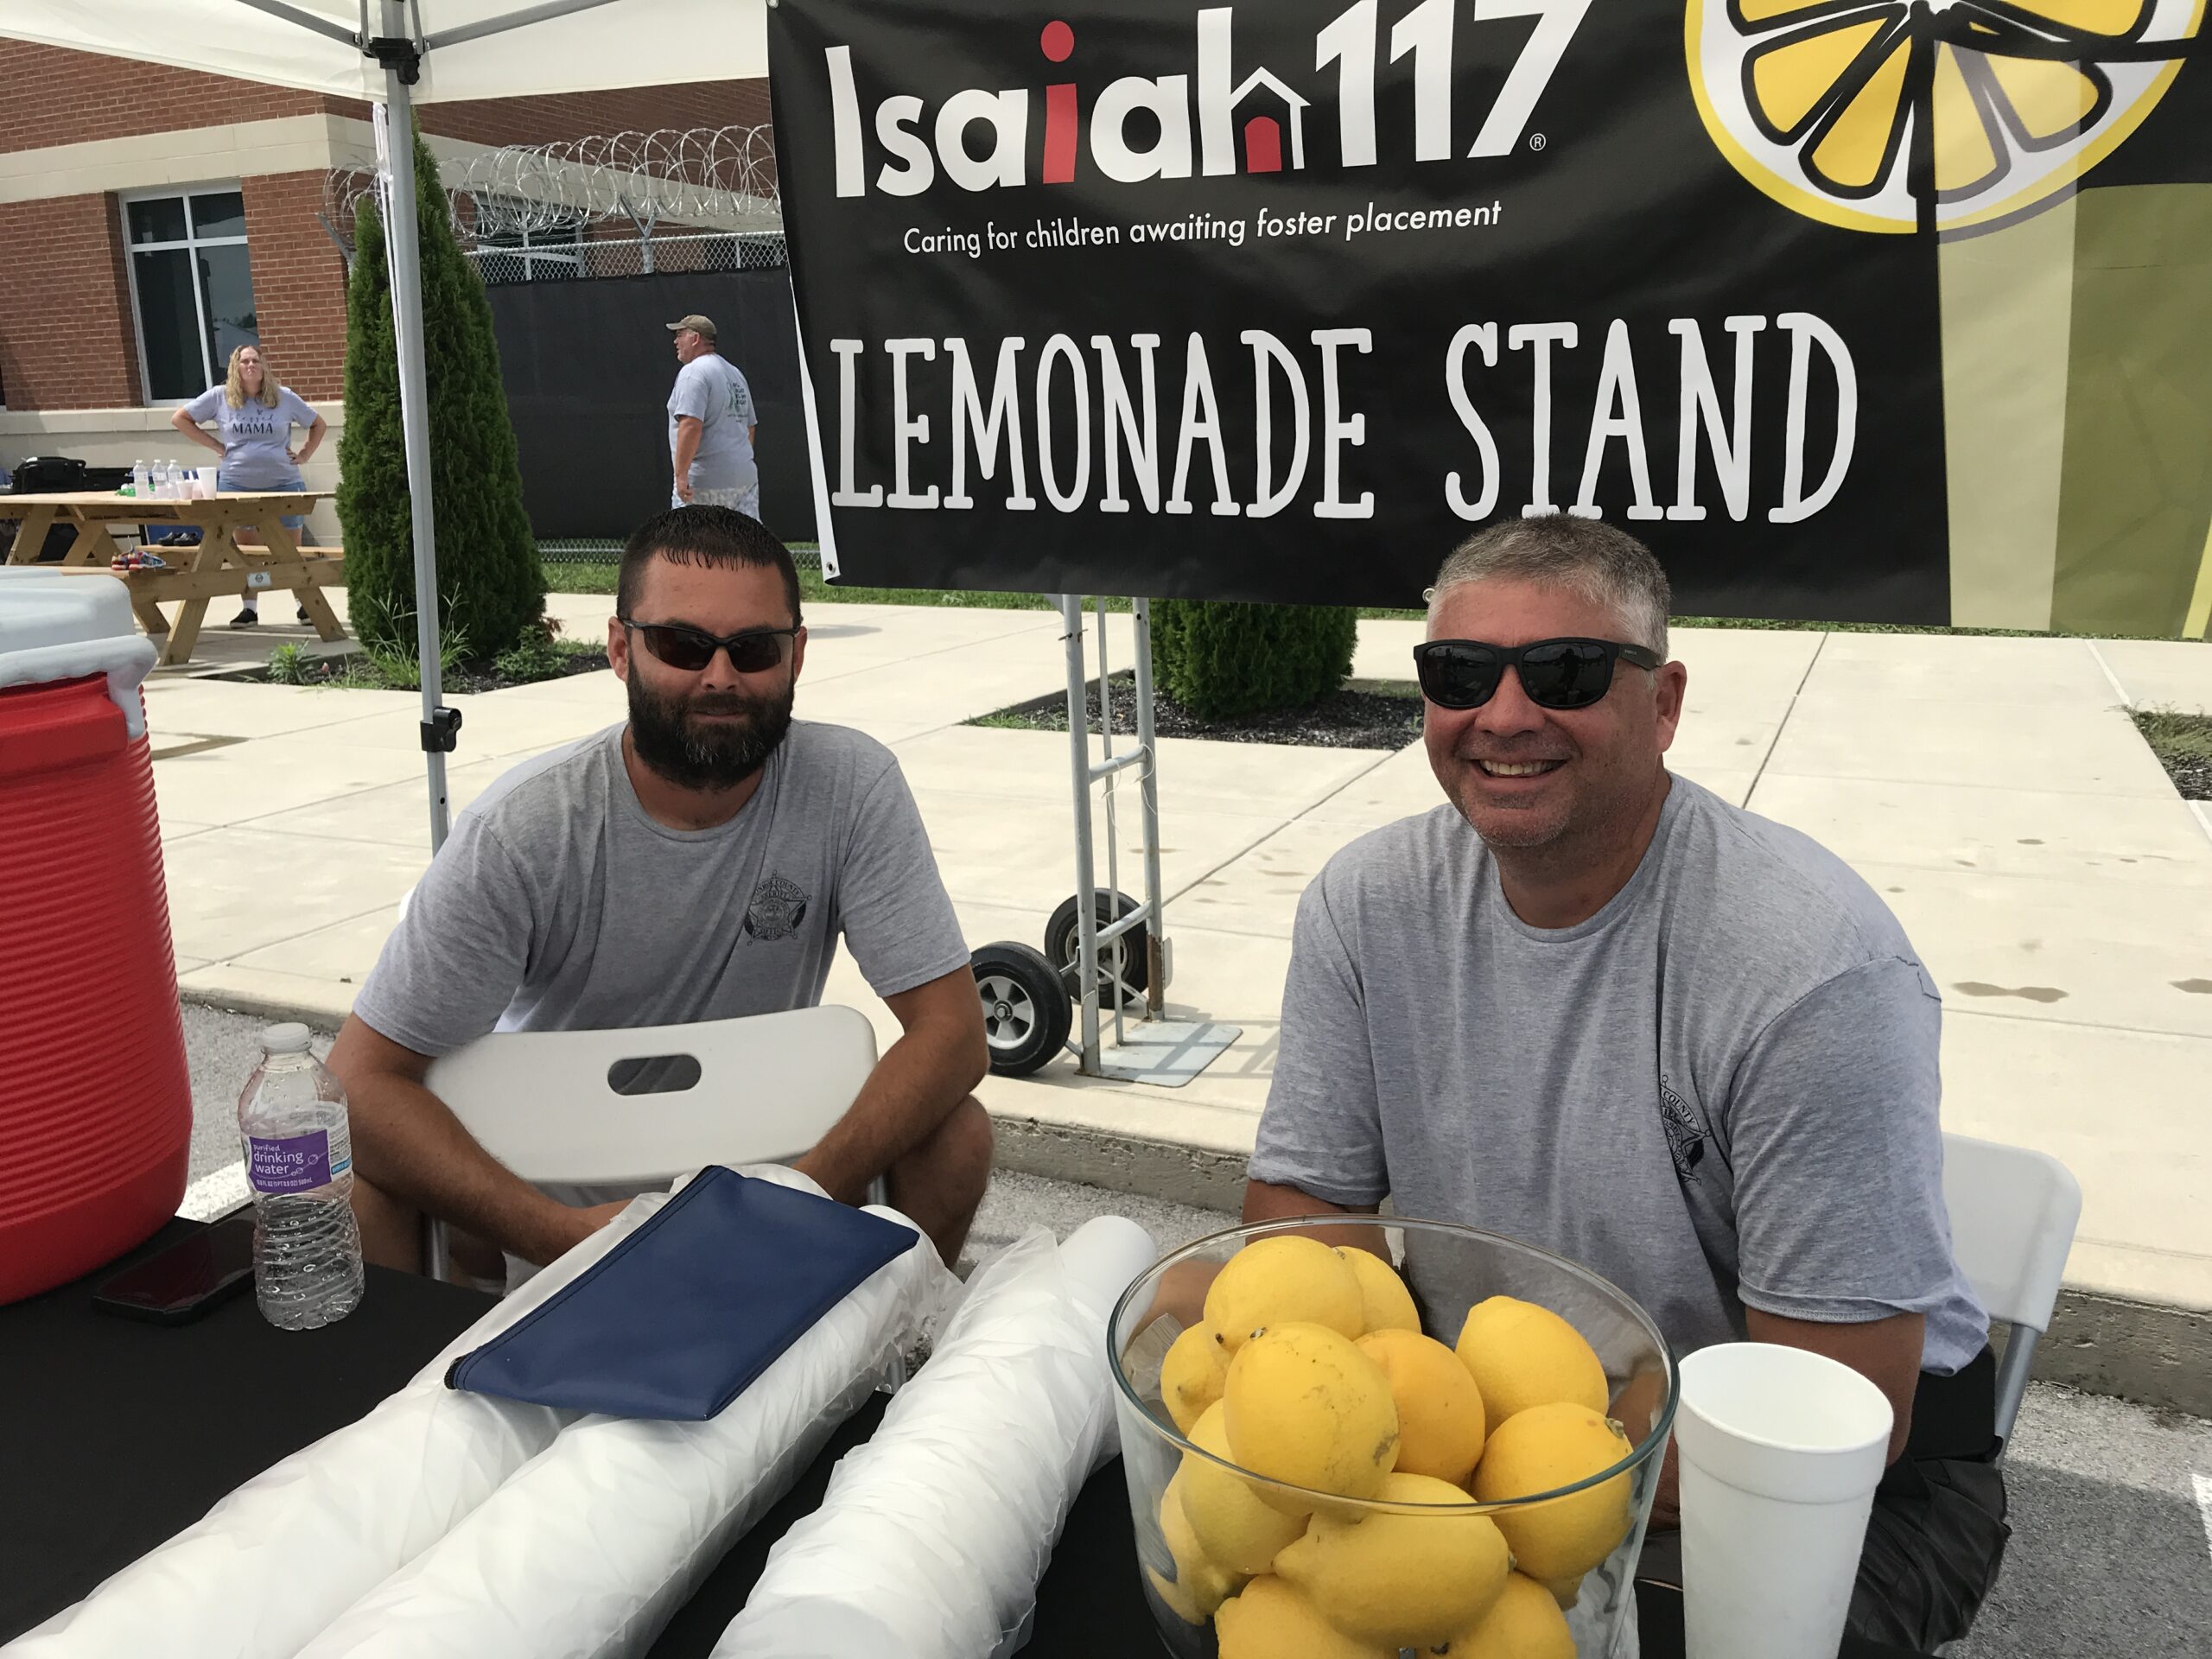 Isaiah 117 lemonade stand